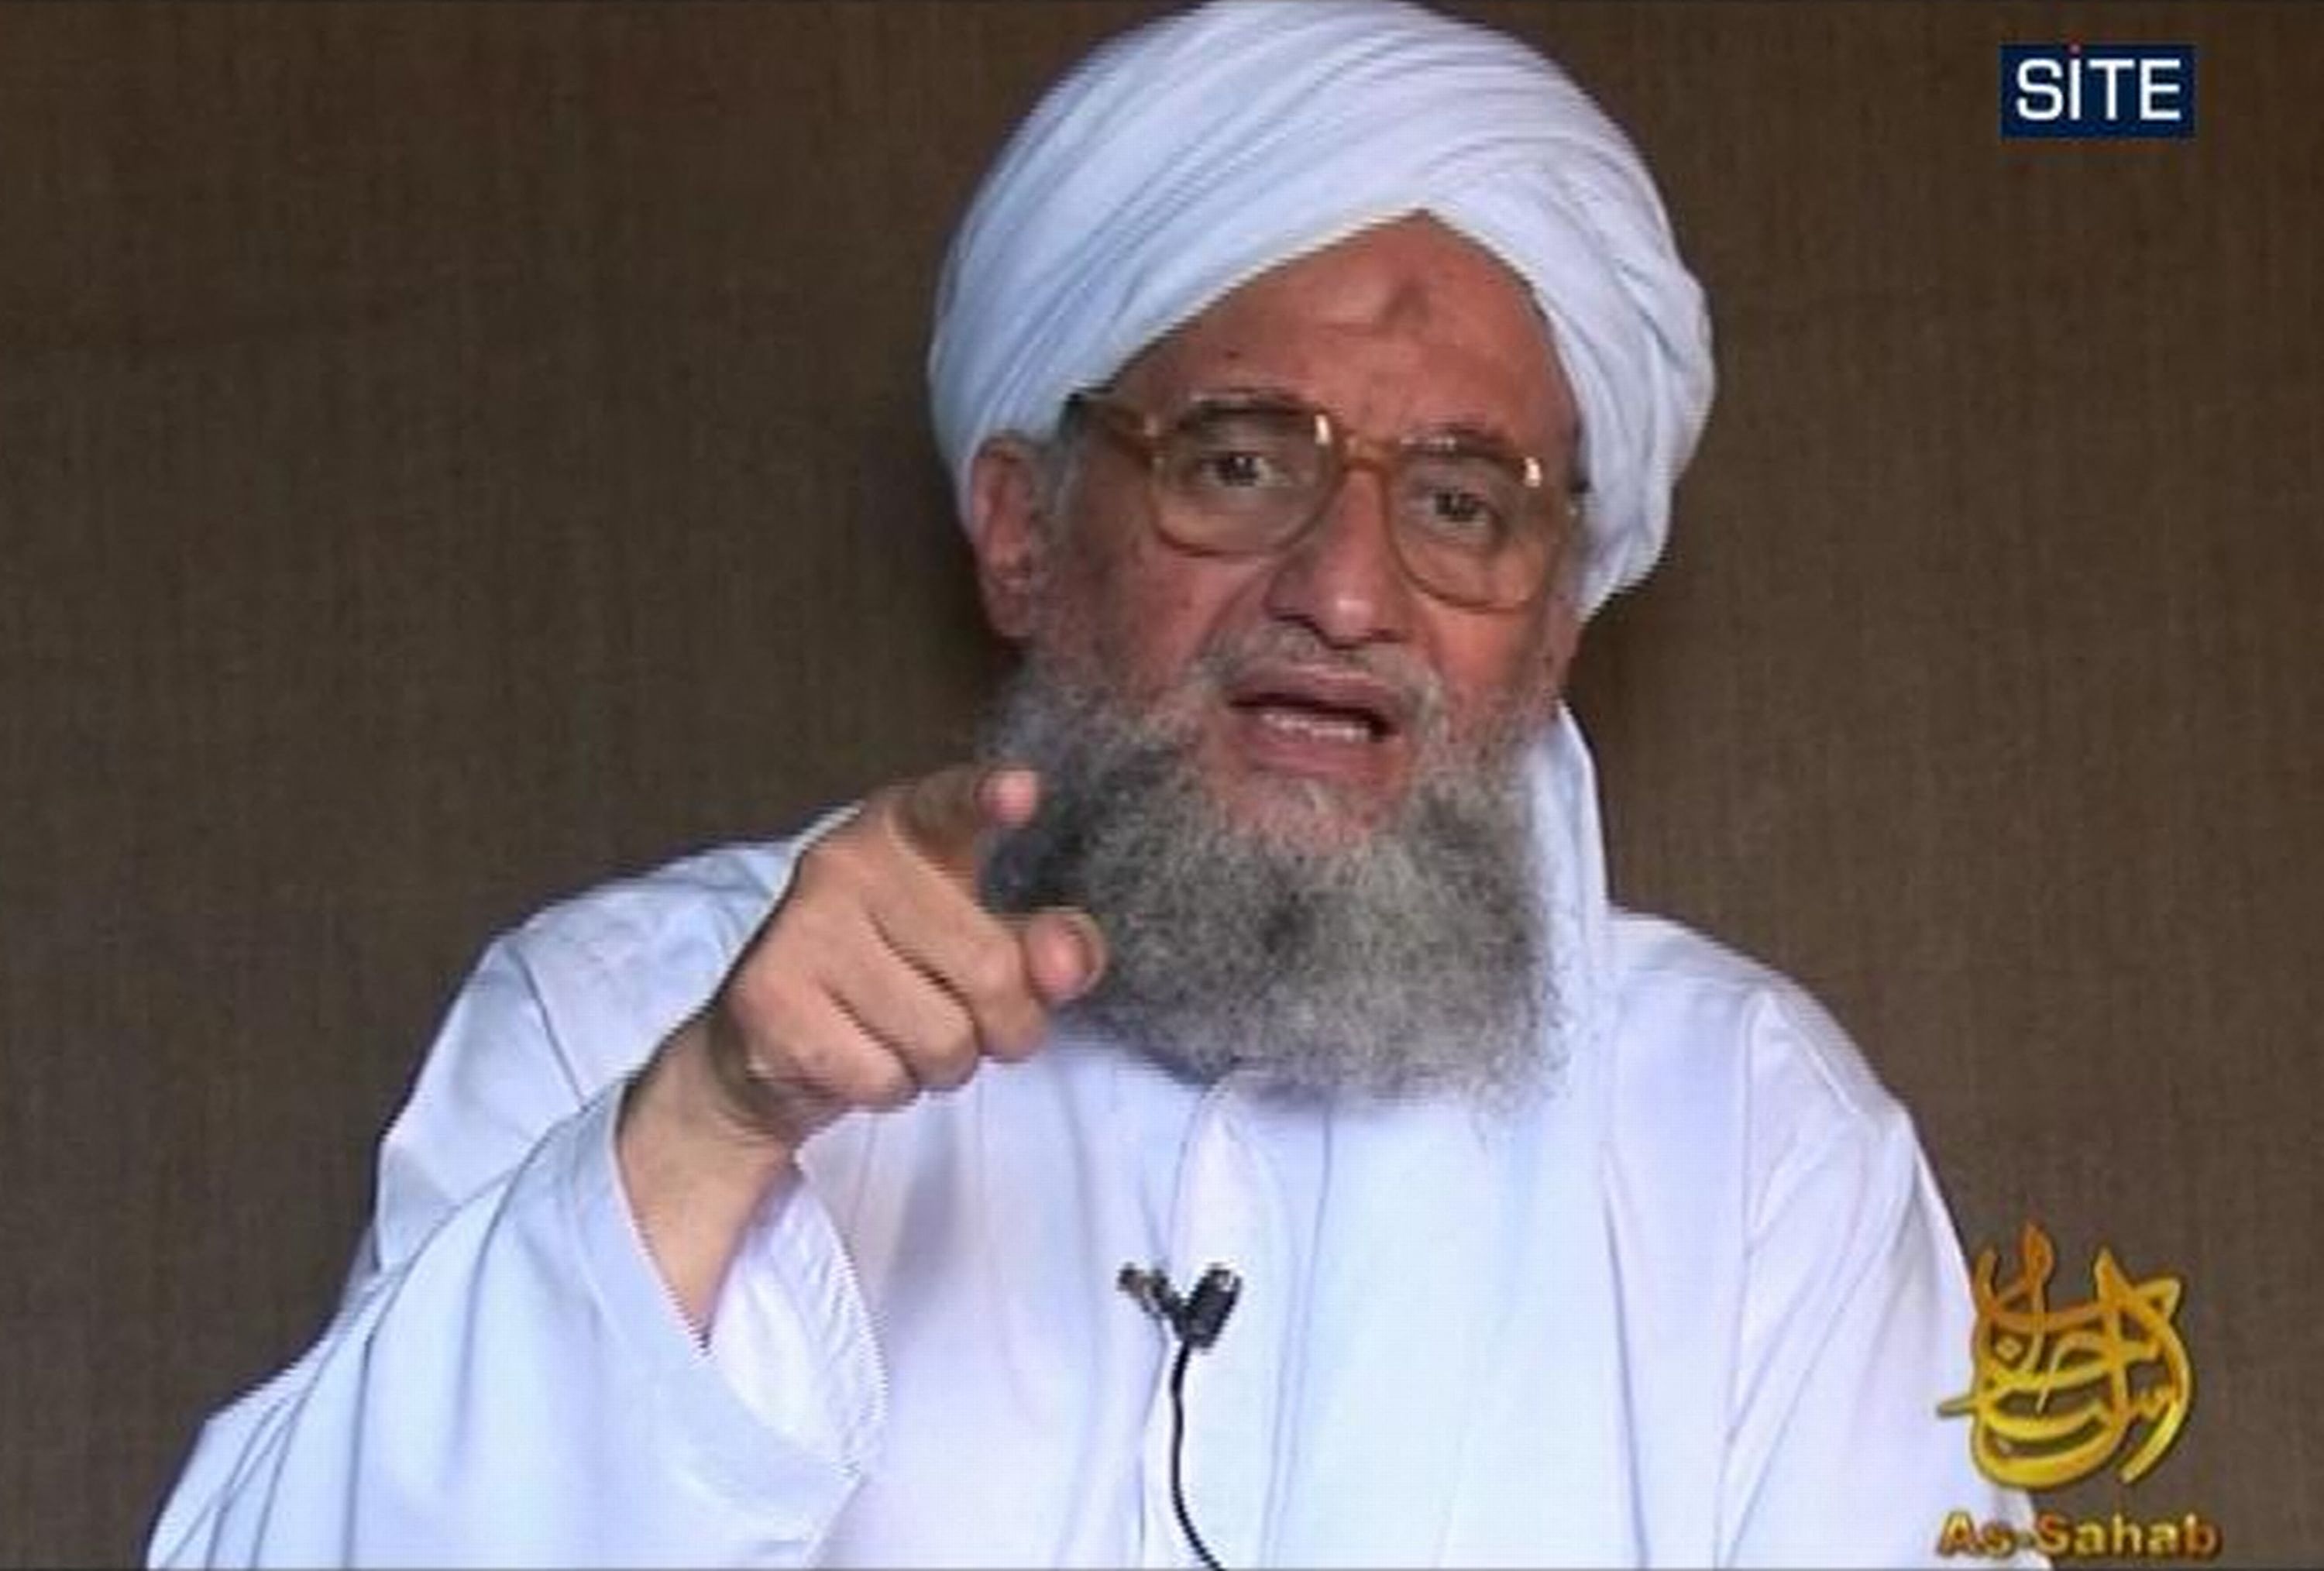 Drone that killed Ayman-al-Zawahiri came from Kyrgyzstan: Reports